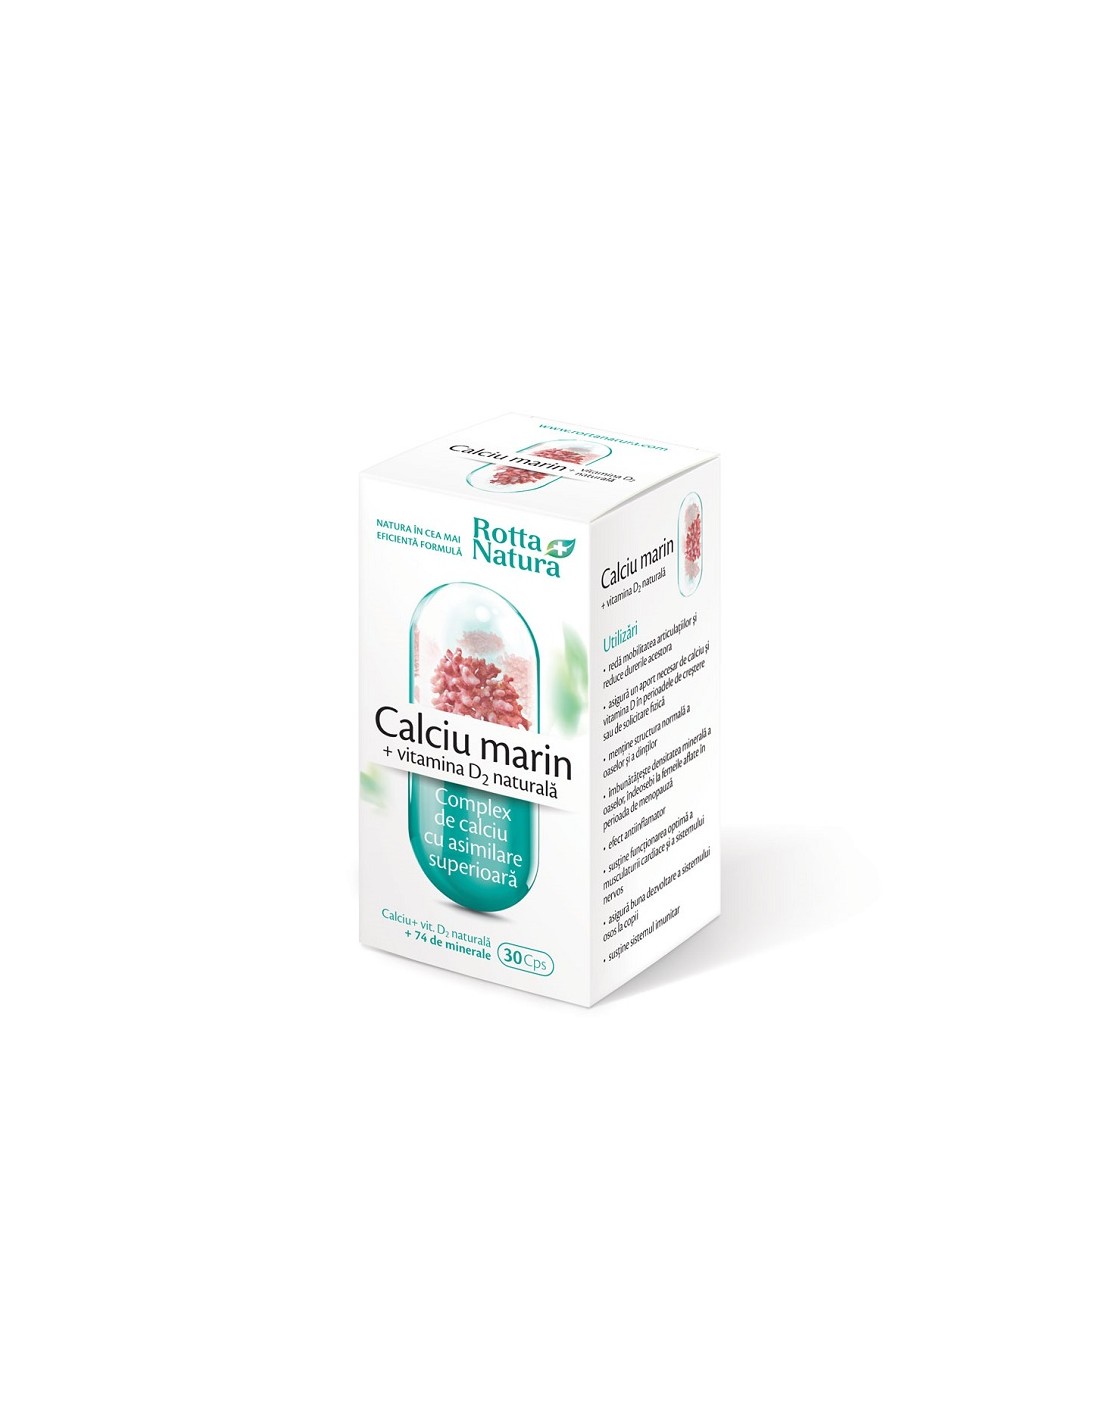 Calciu Marin + Vitamina D2 naturala, 30 capsule, Rotta Natura - UZ-GENERAL  - FARA